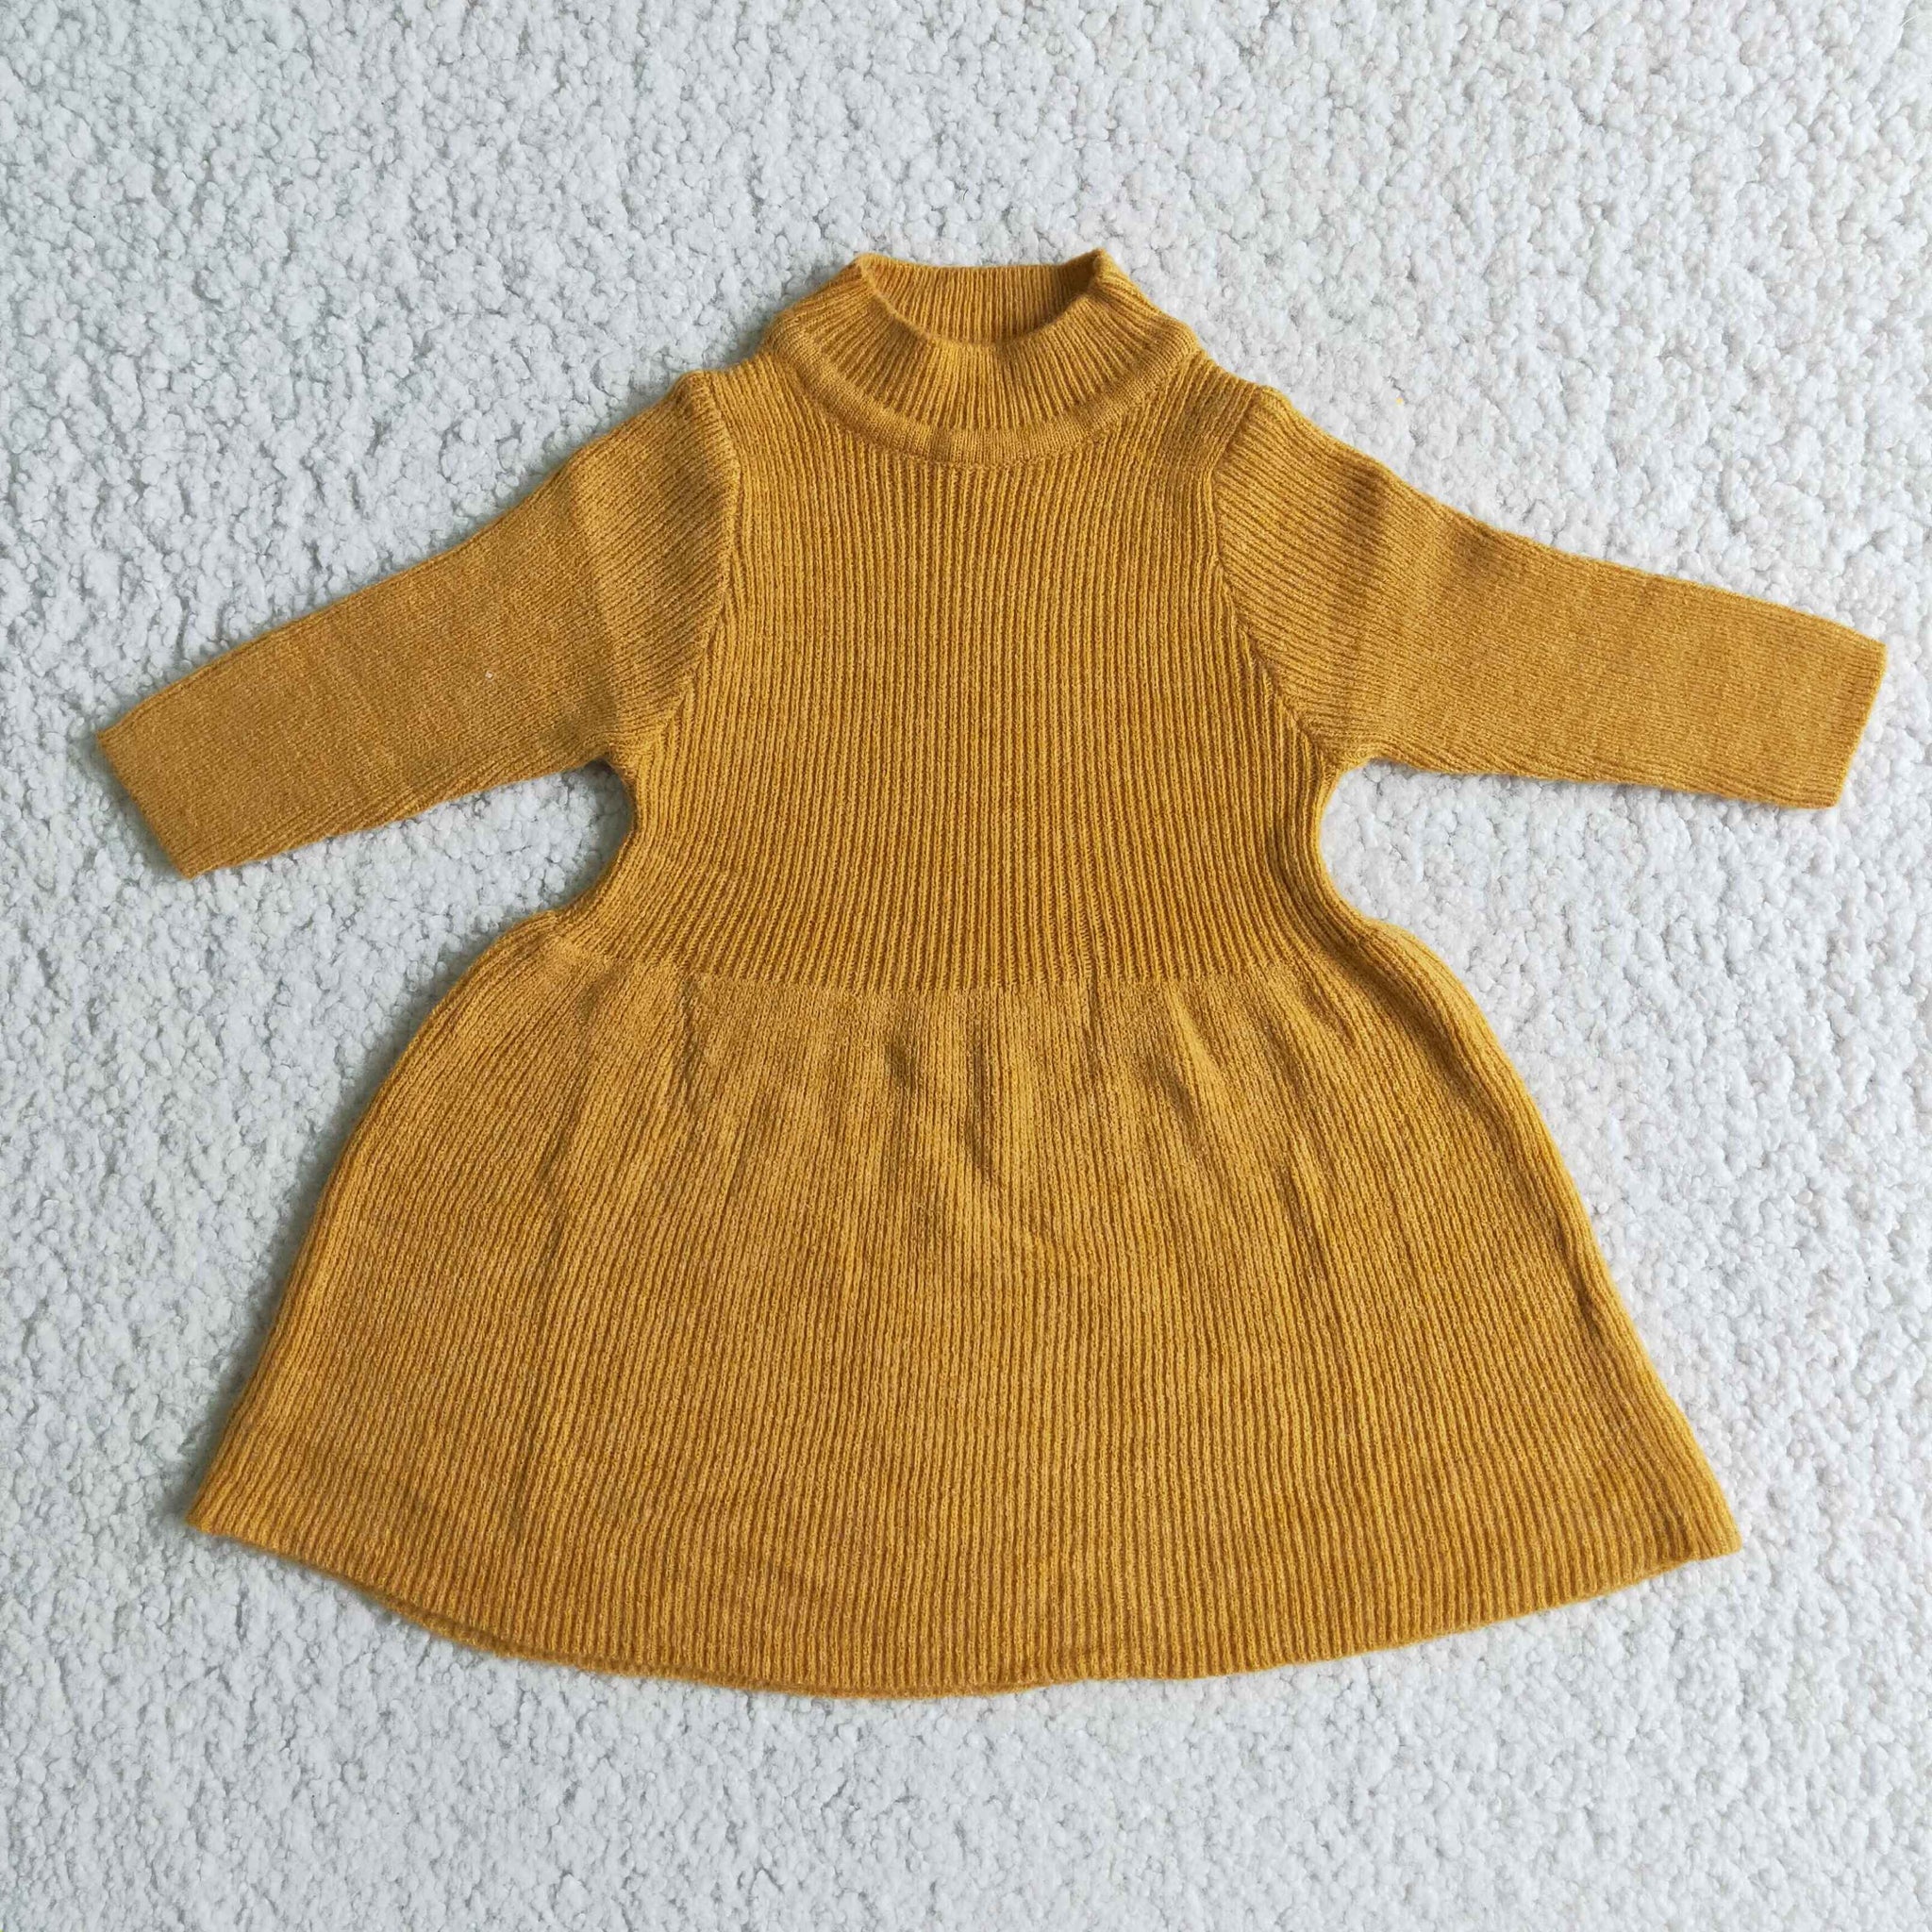 6 A5-13 girl winter long sleeve yellow sweater dress